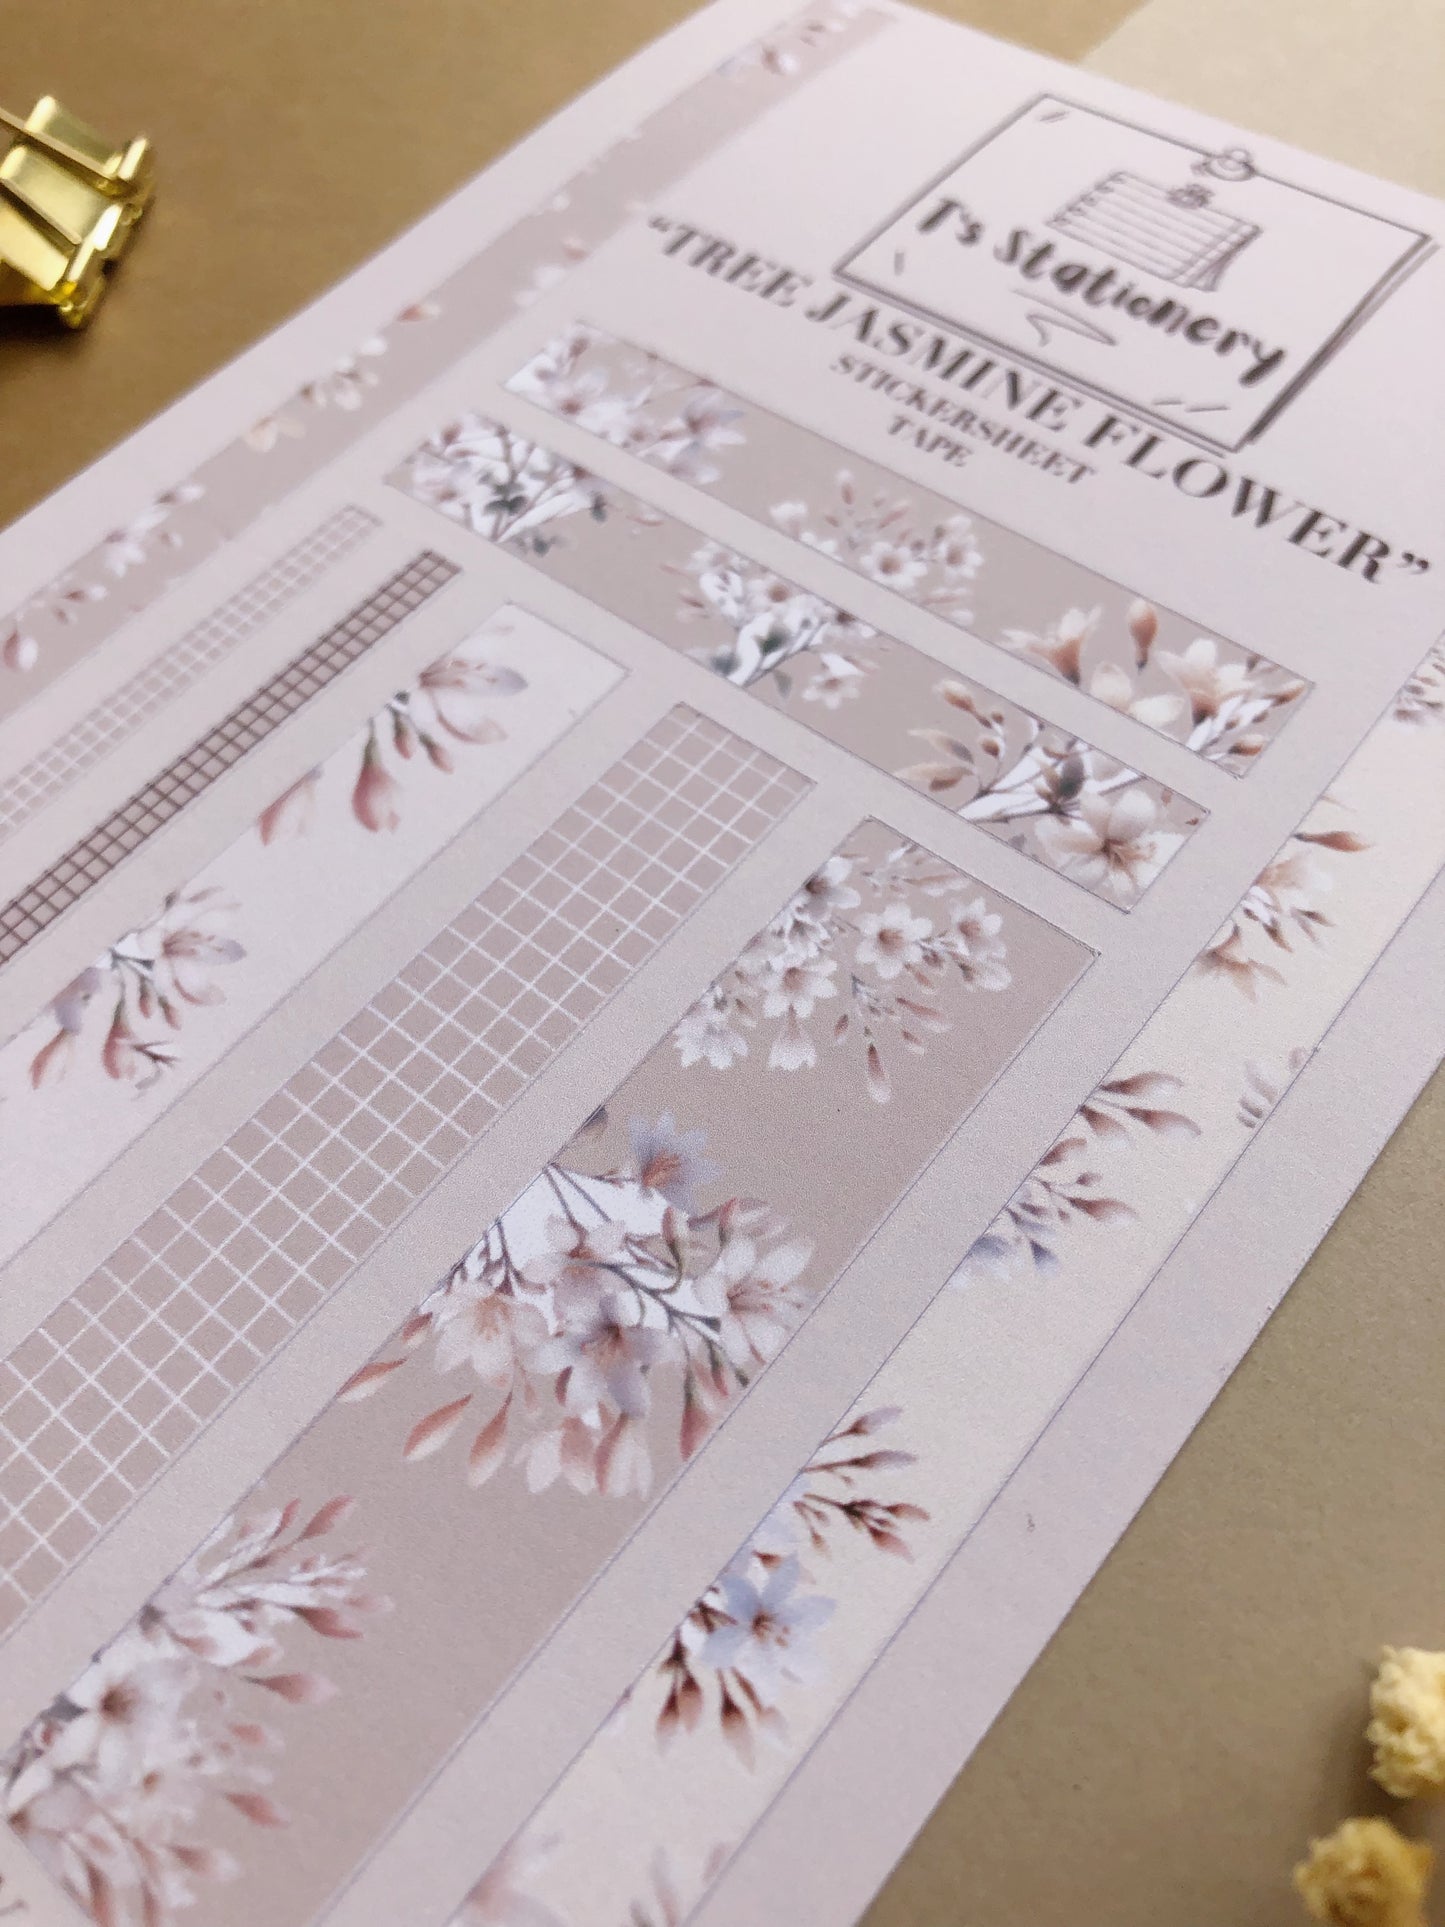 "Tree Jasmine Flower" Sticker Sheet Tape